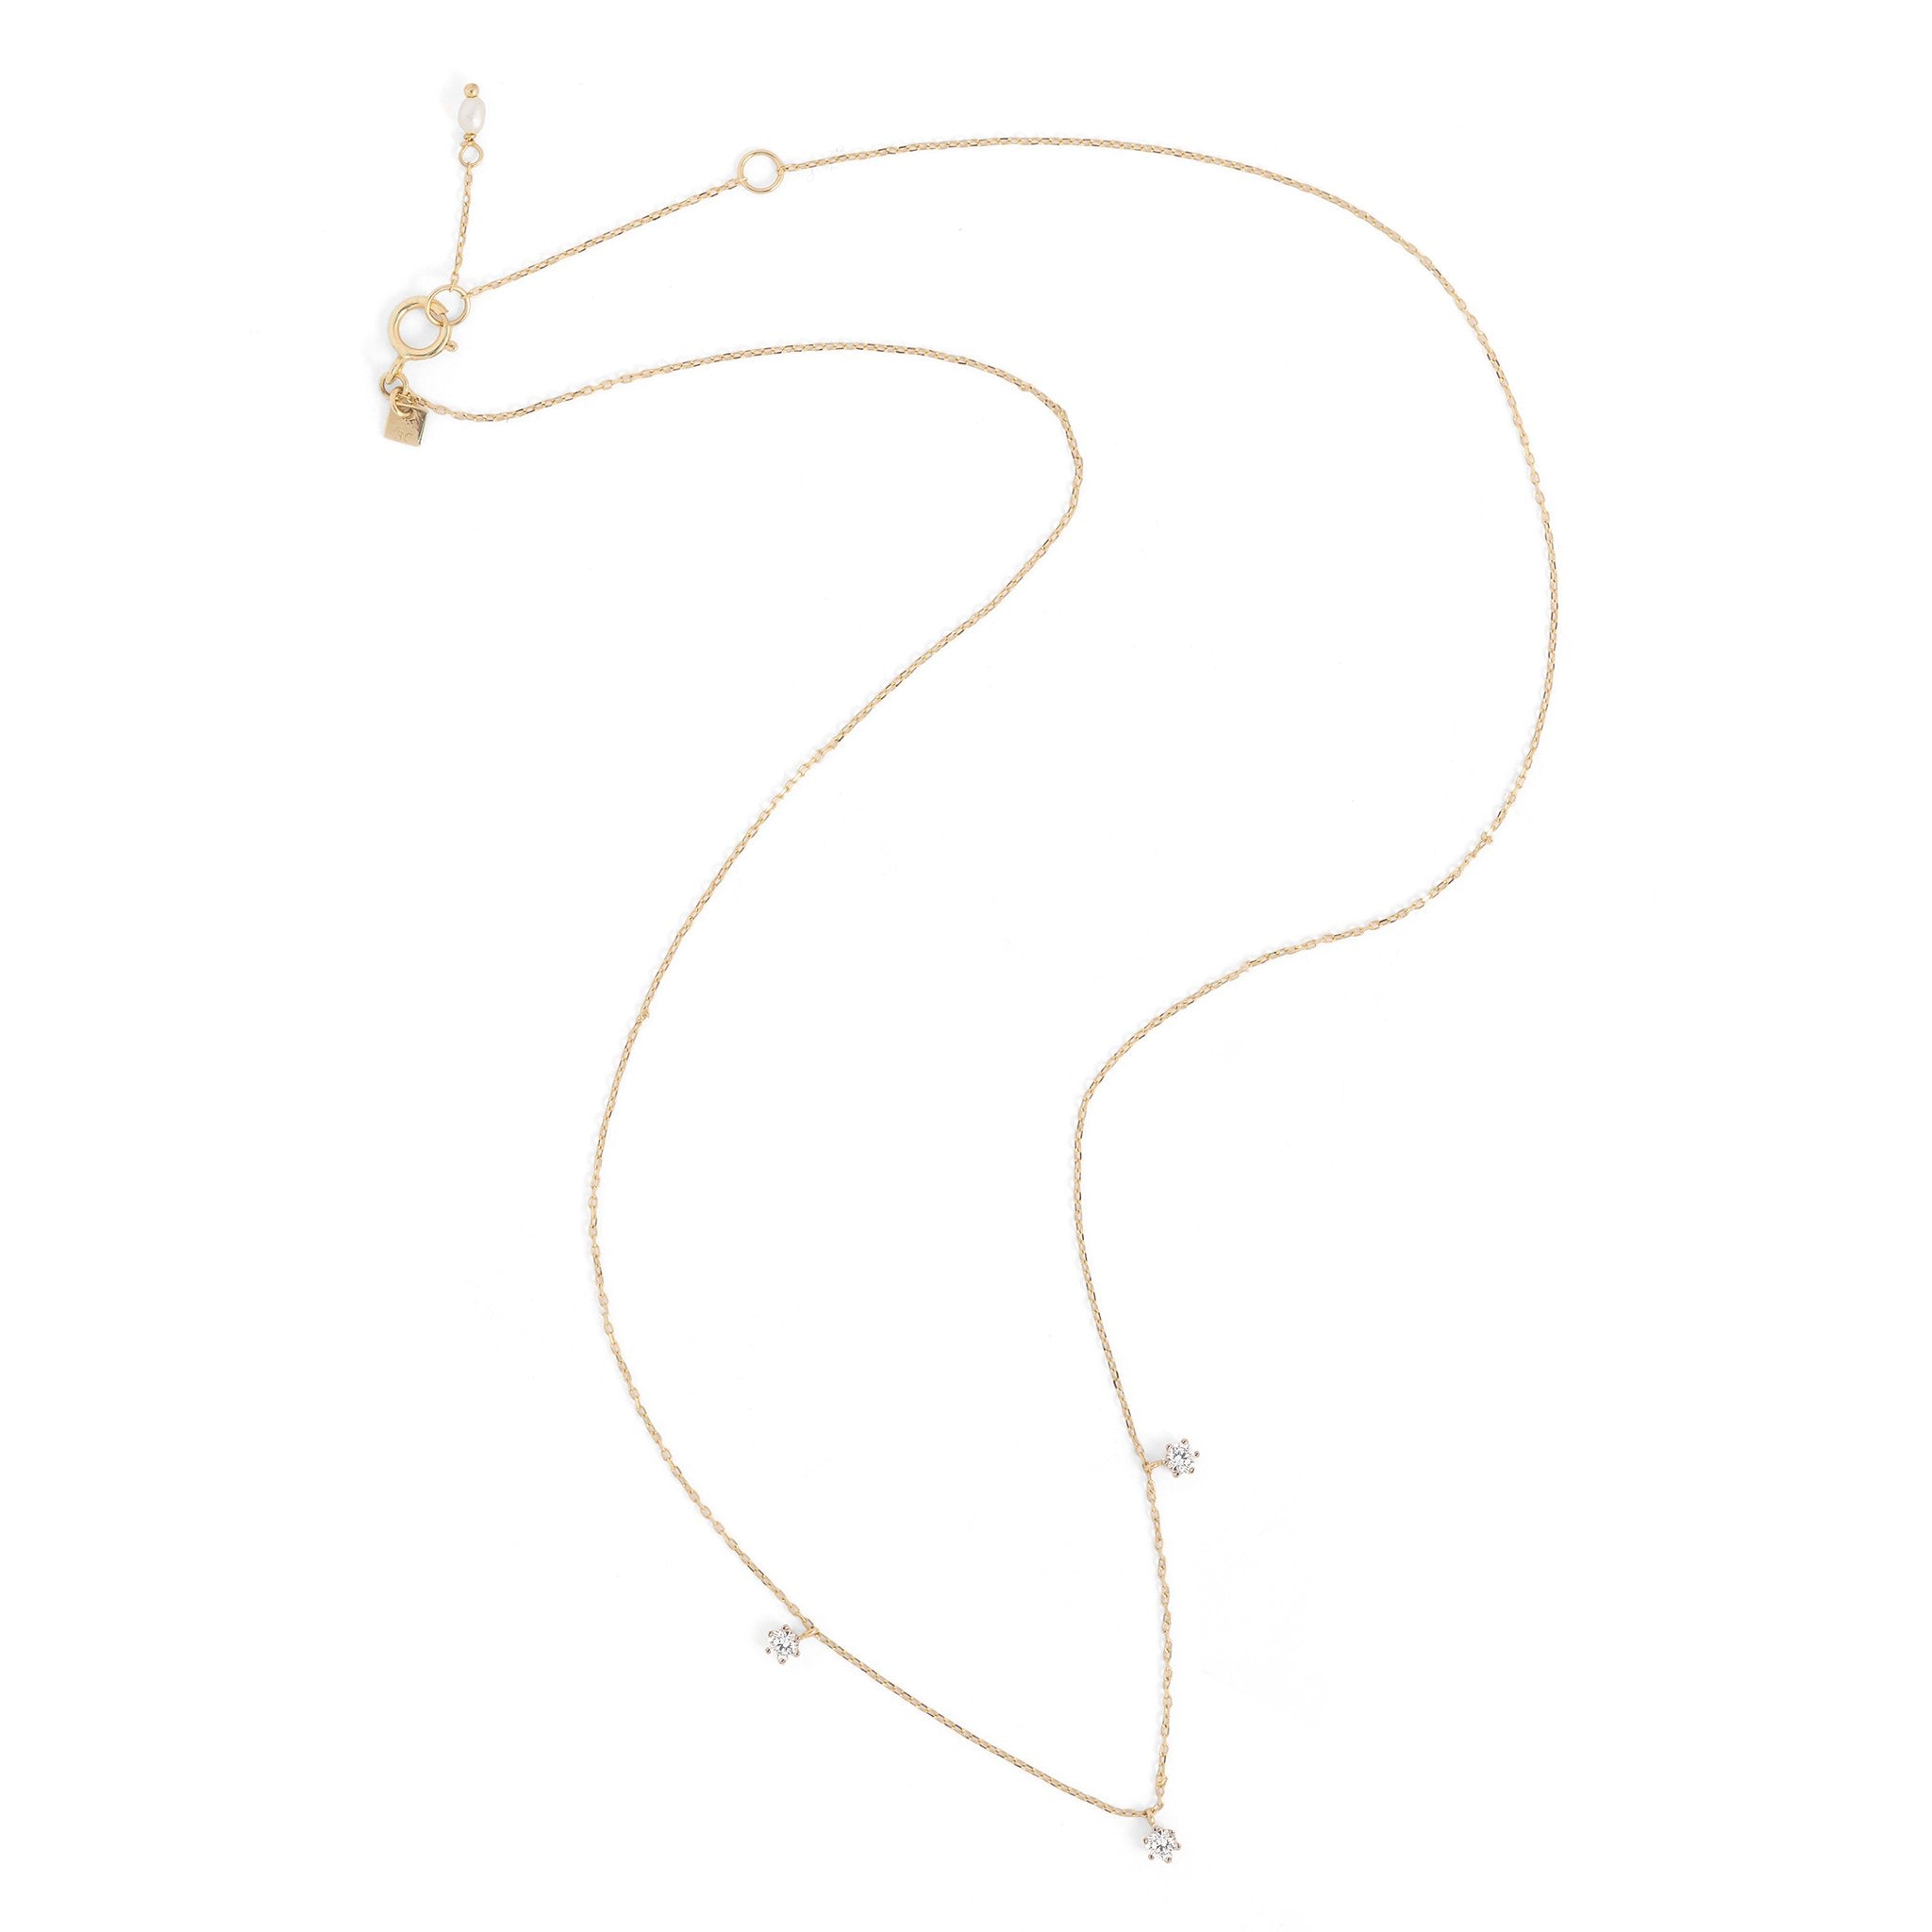 14k Gold Droplets Diamond Necklace - Prae Store